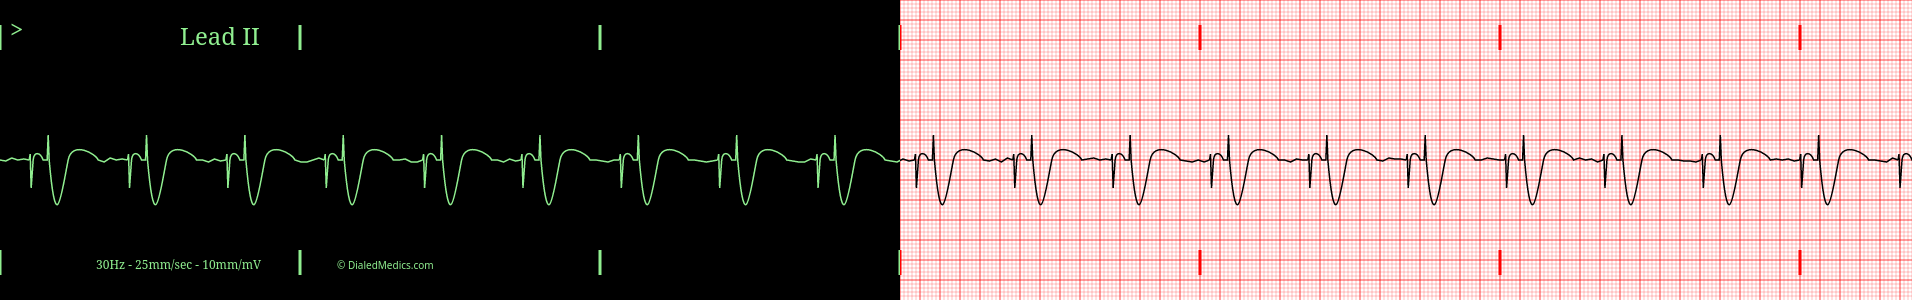 Example of AV Pacemaker ECG tracing.